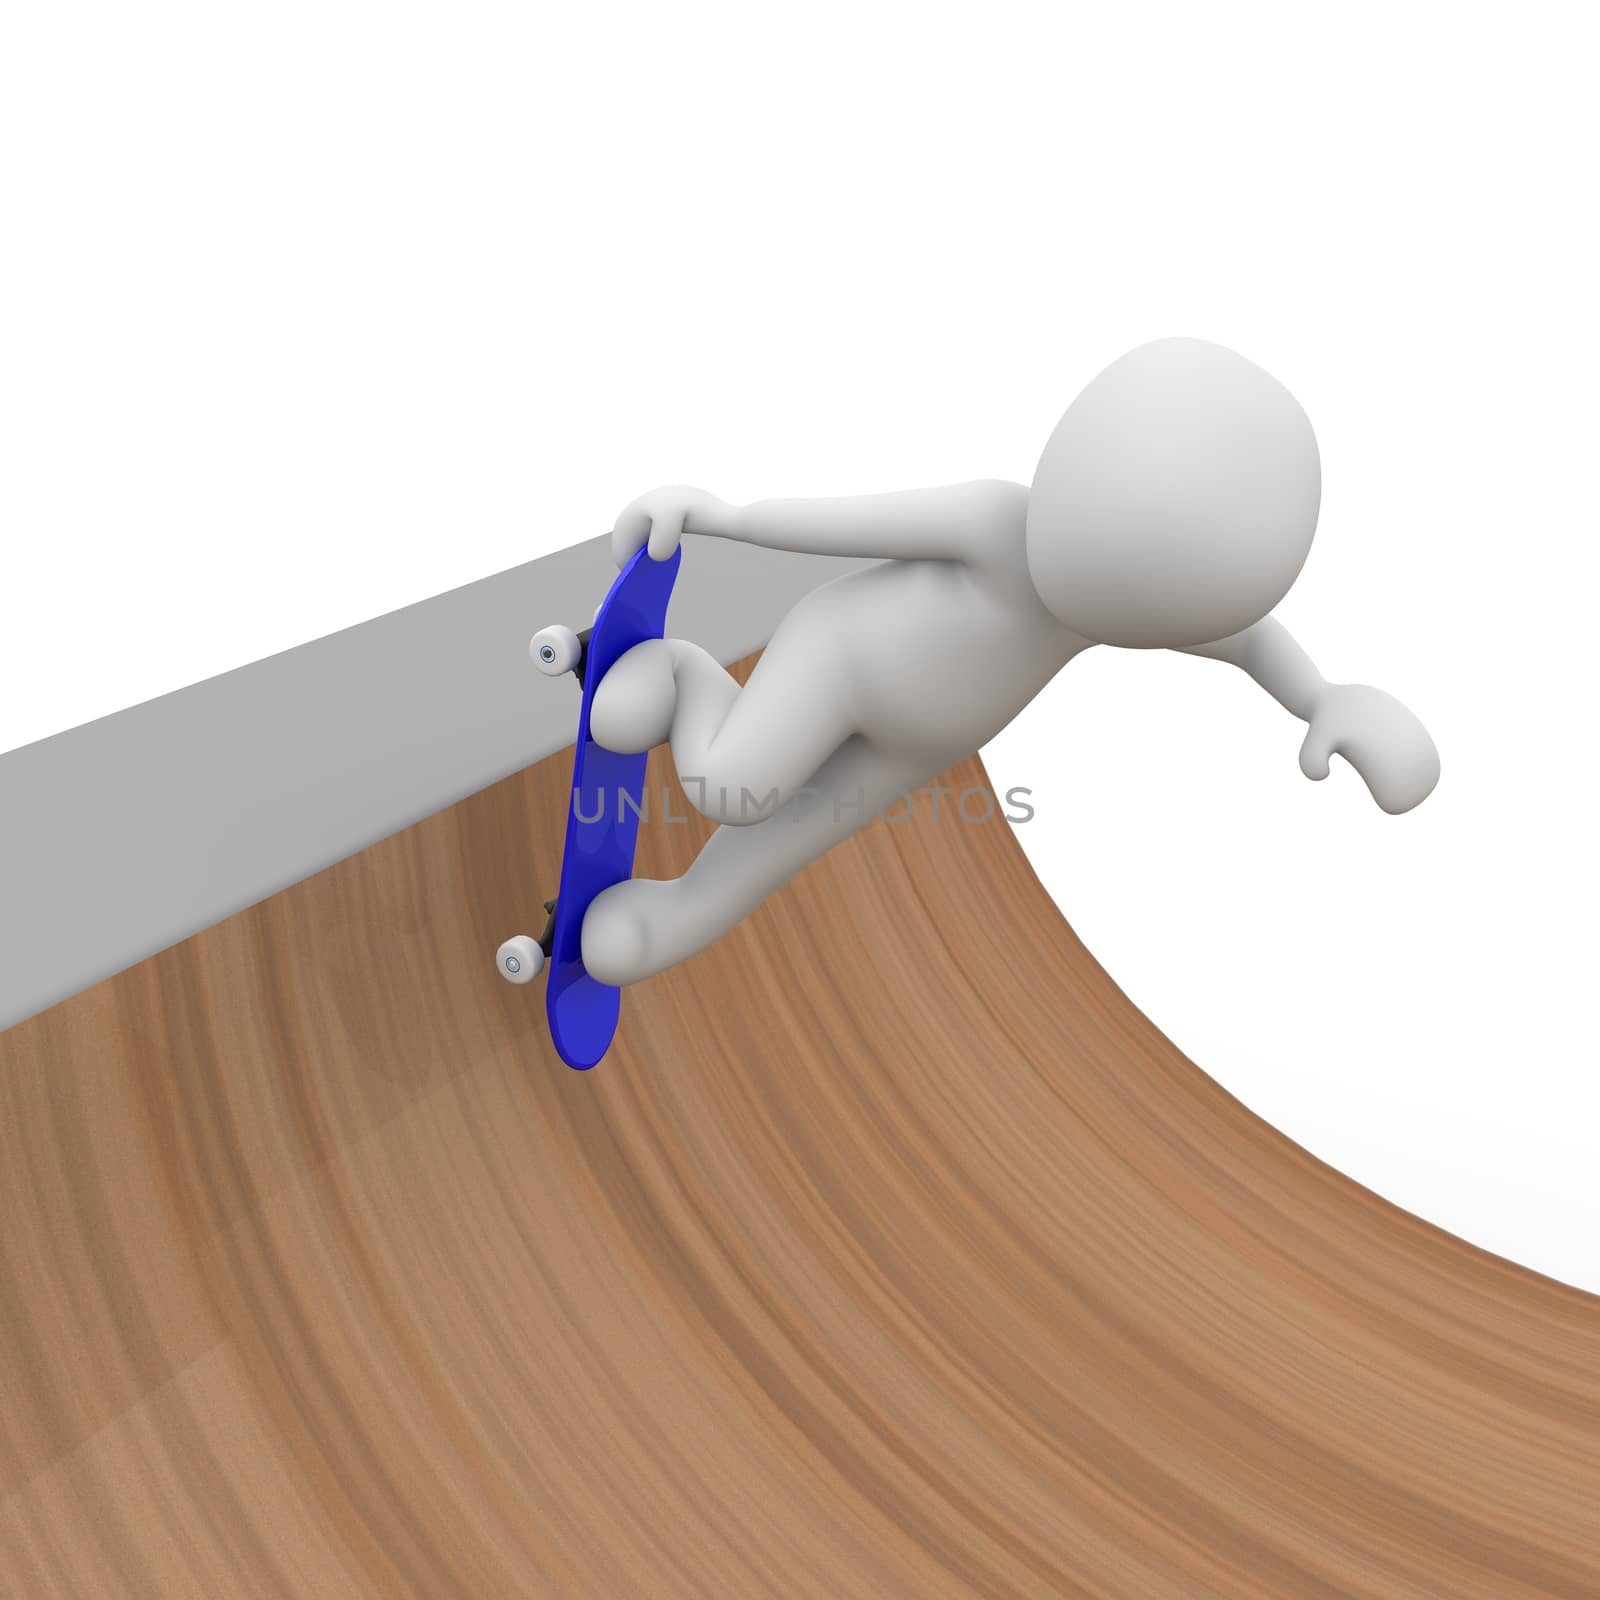 skateboard ramp by 3DAgentur